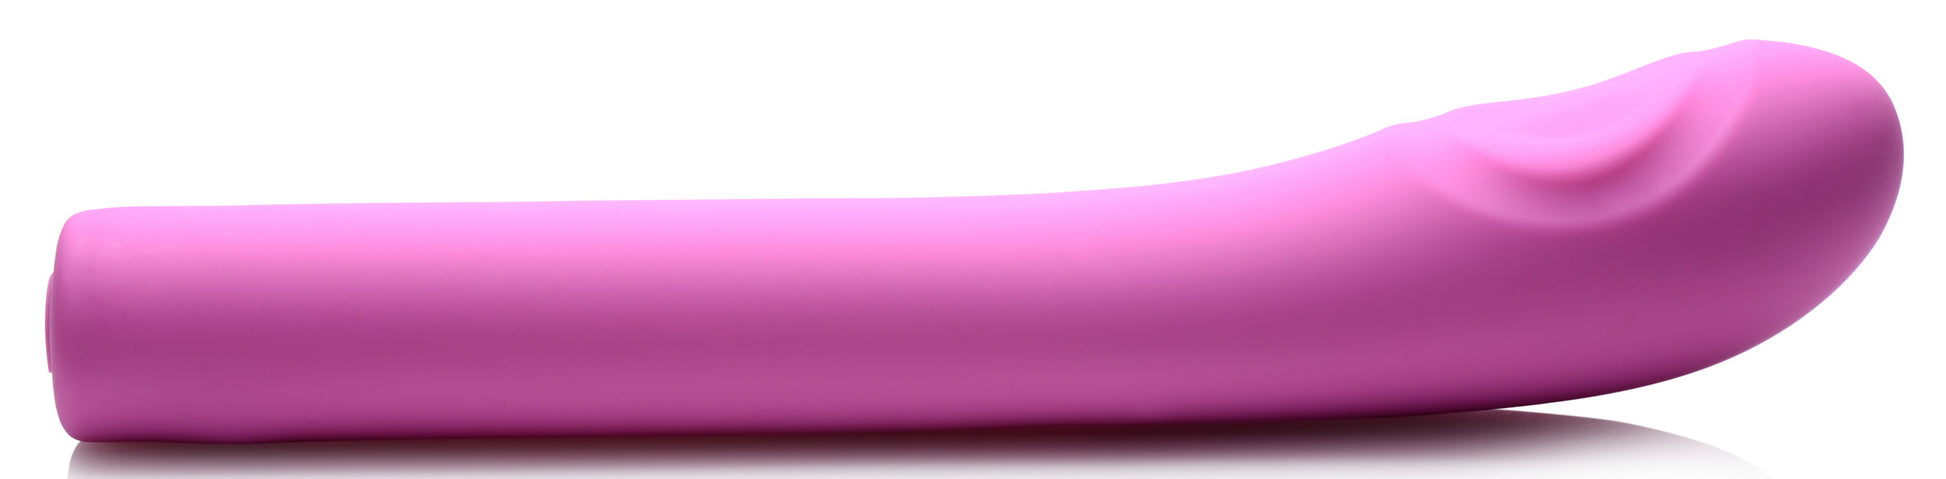 5 Star 9X Pulsing G-spot Silicone Vibrator - Pink - UABDSM